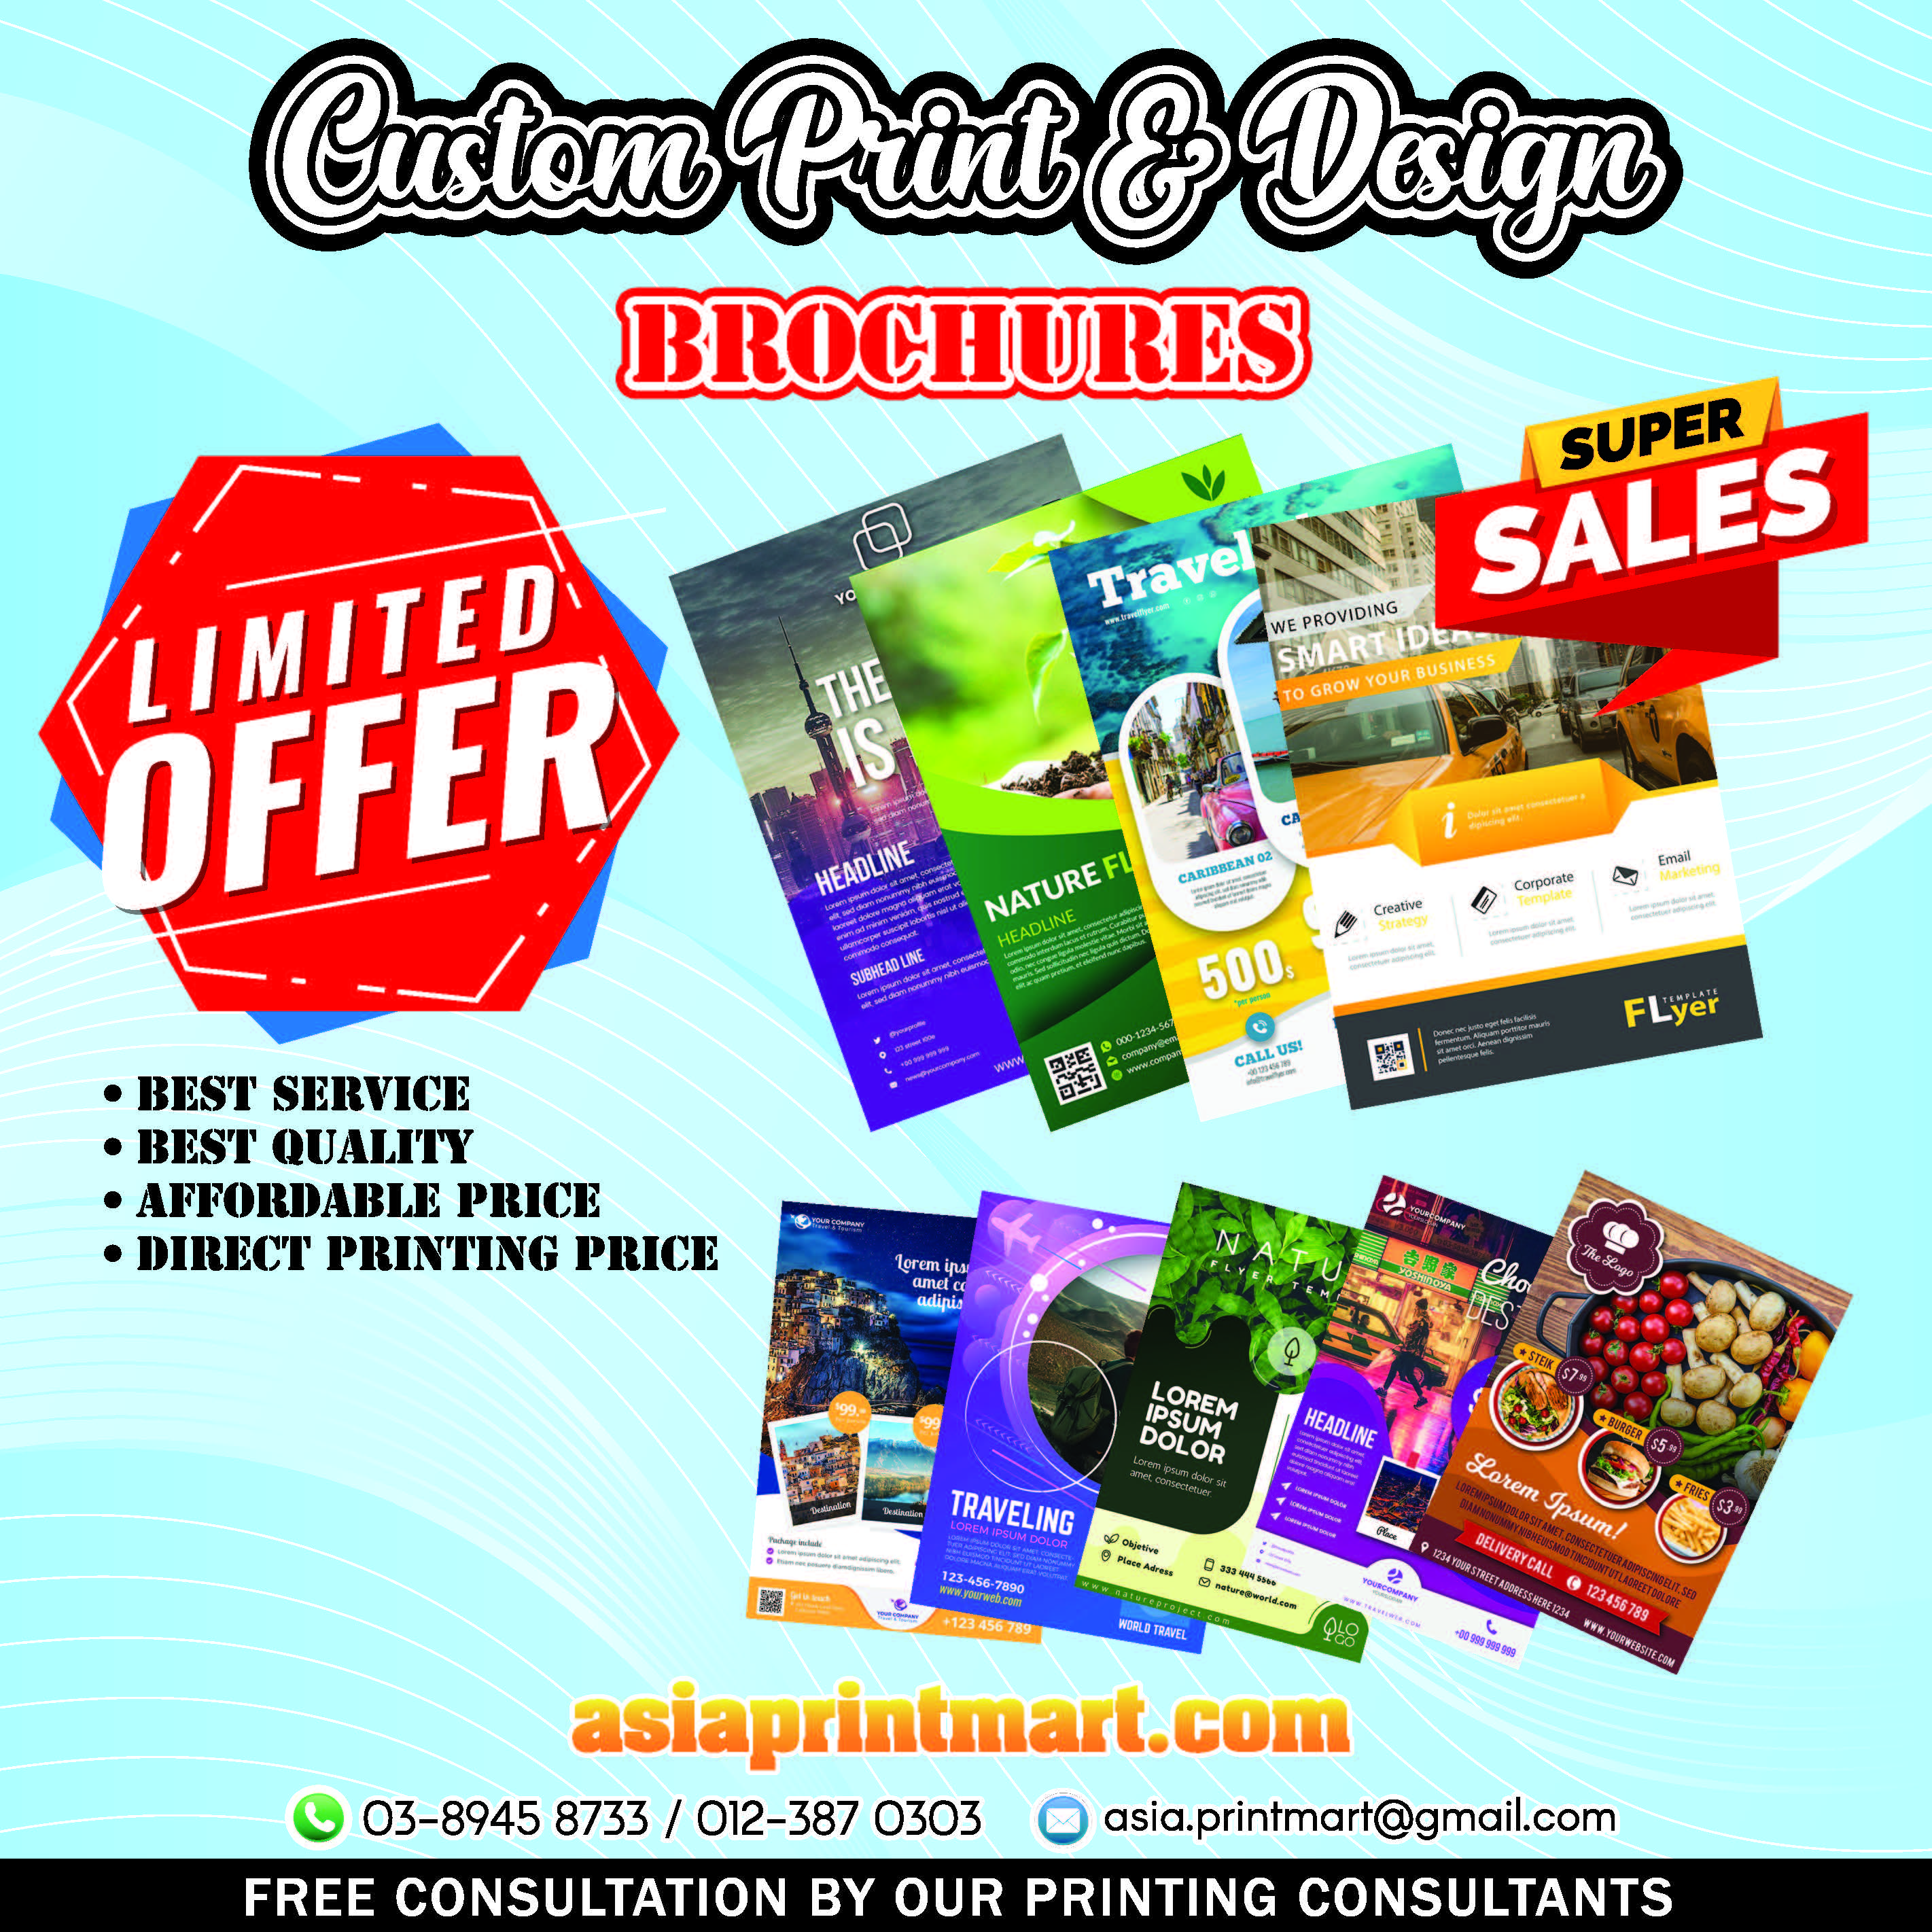 Online Leaflets Printing | Urgent Printing Flyers Company | Brochures Printers 24 hours | Fast Brochures Printing | Kedai cetak murah risalah